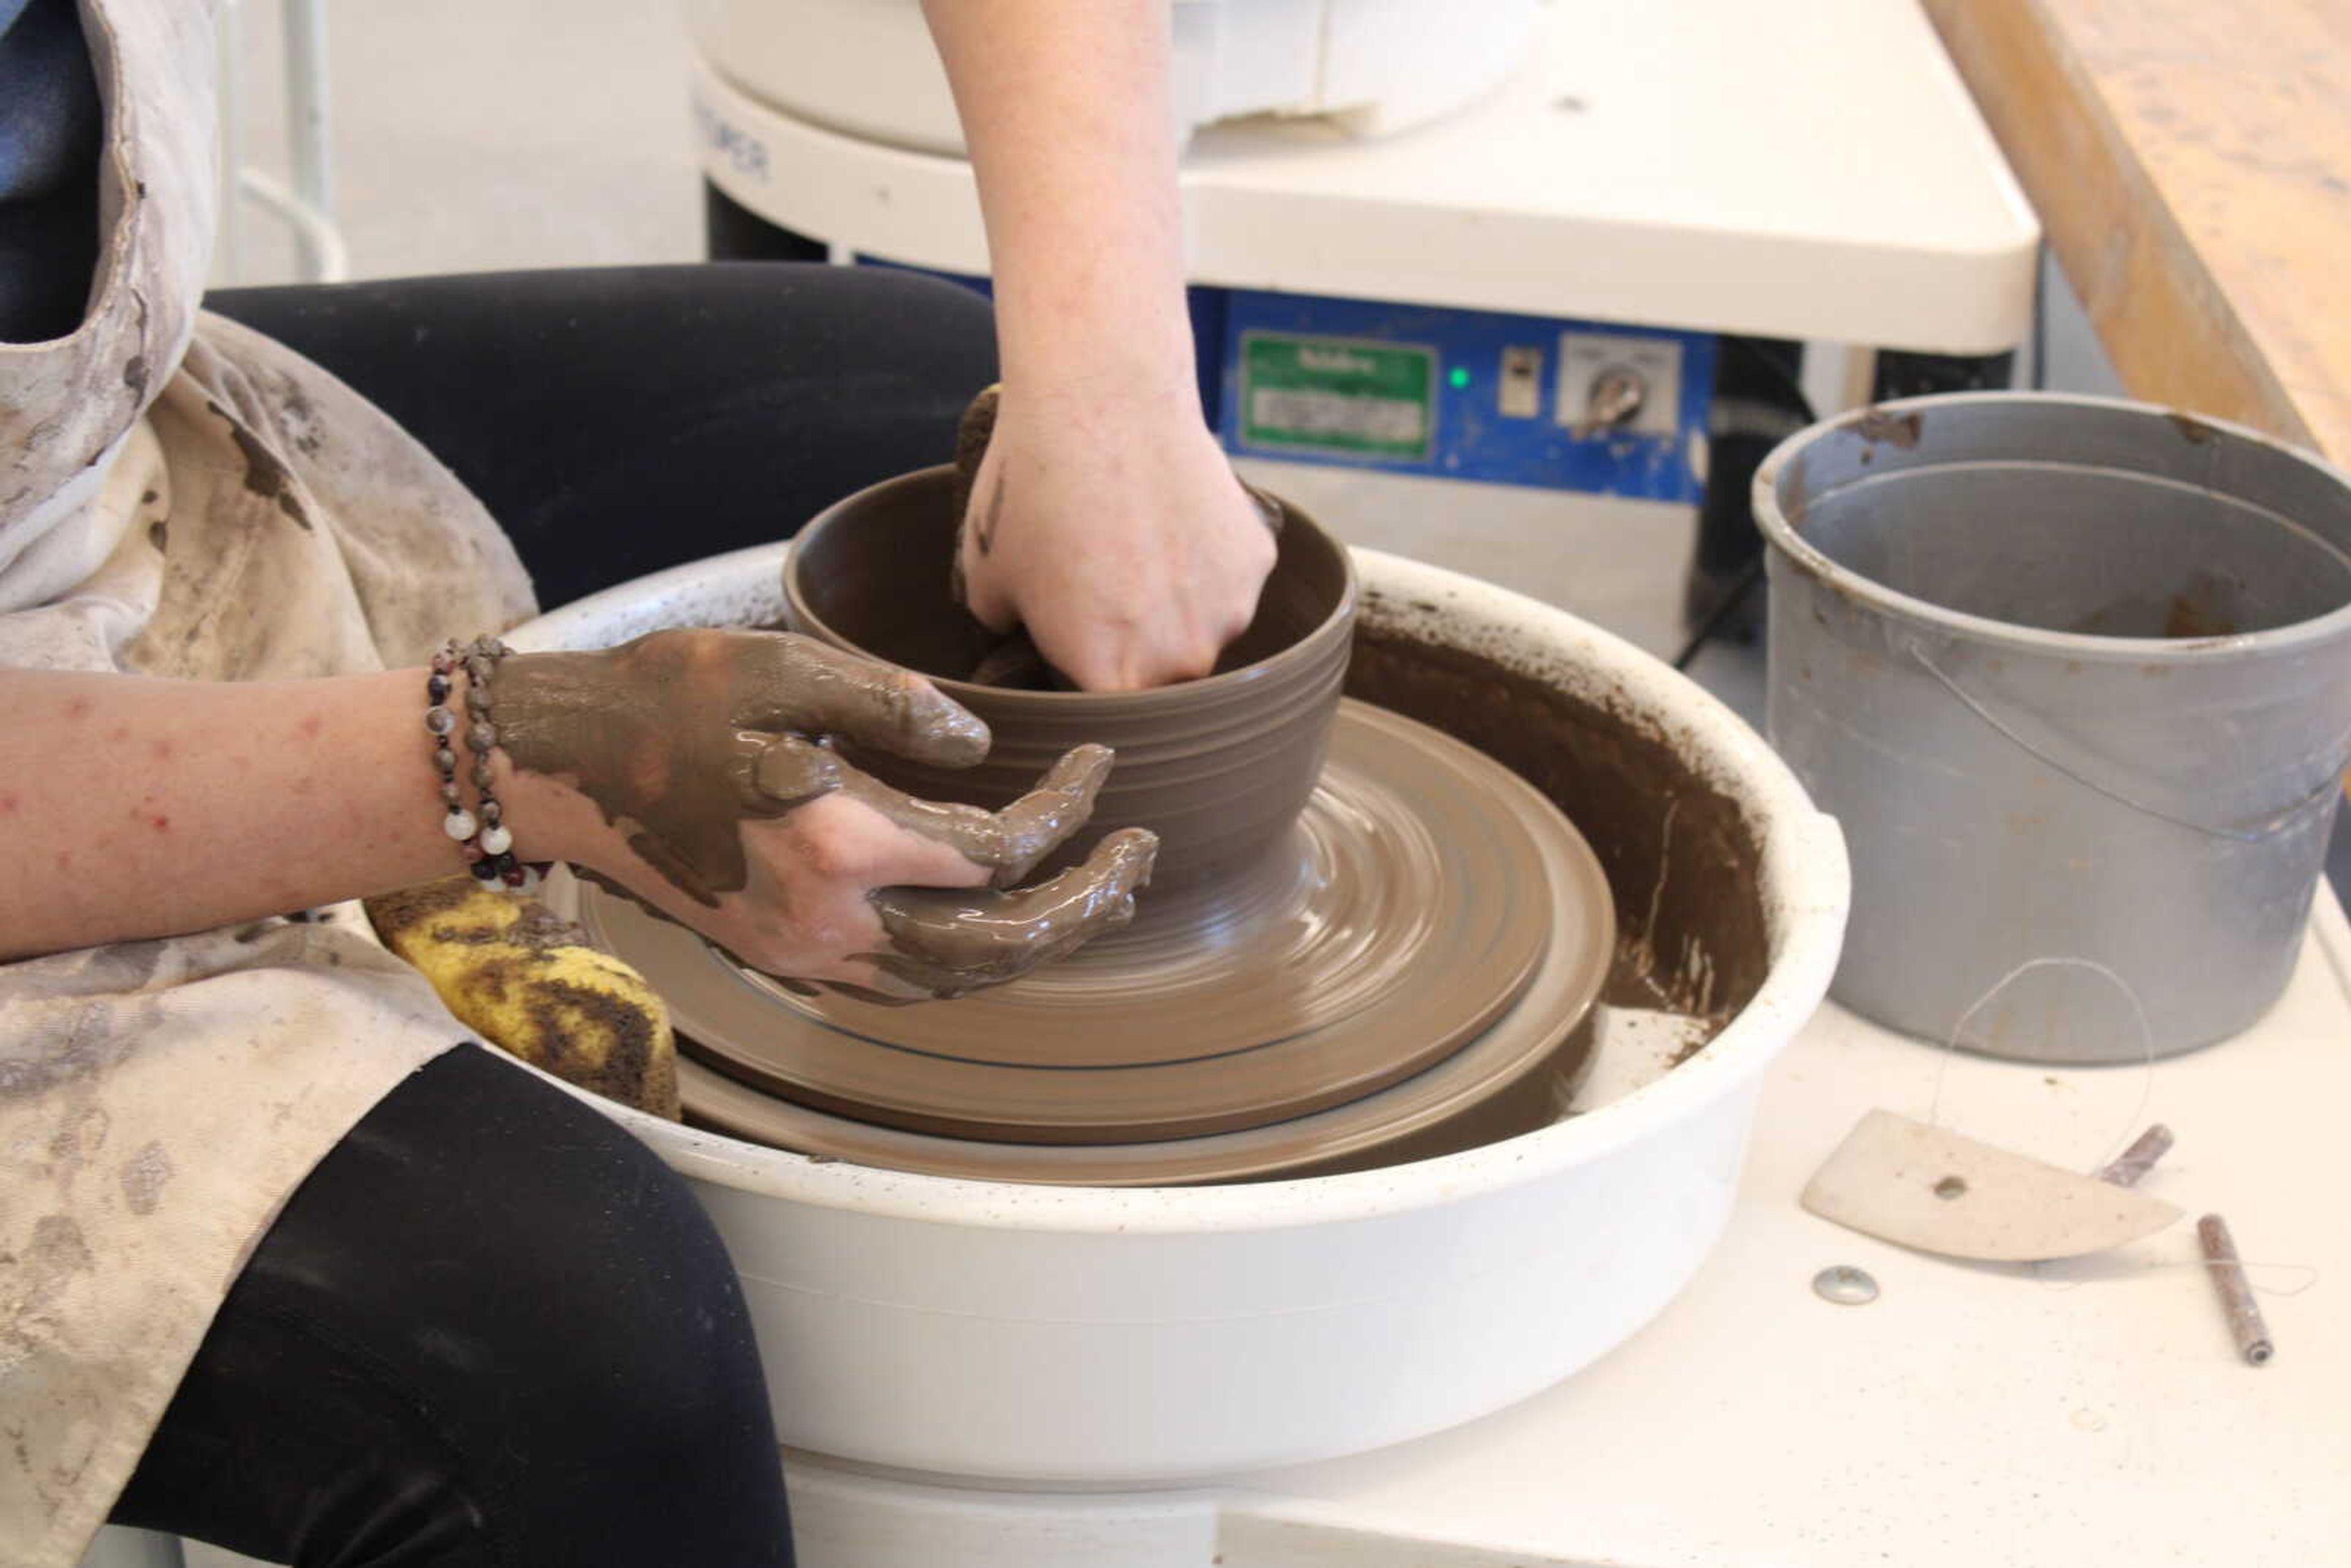 Senior art major Alexis Richardson finds love and struggle with ceramics